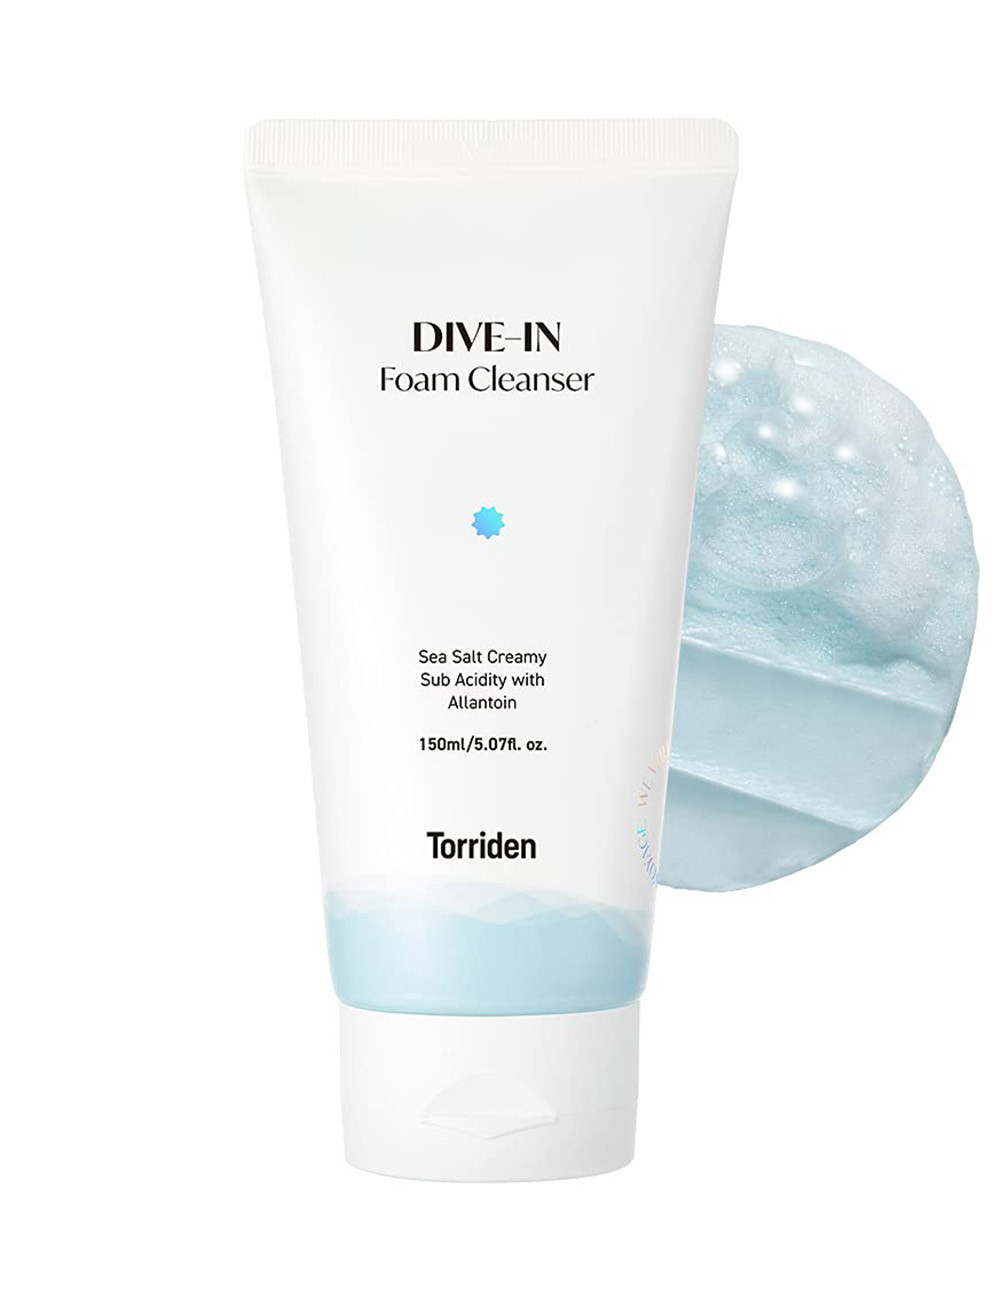 TORRIDEN Dive-in Sea Salt Creamy Sub Acidity Foam Cleanser